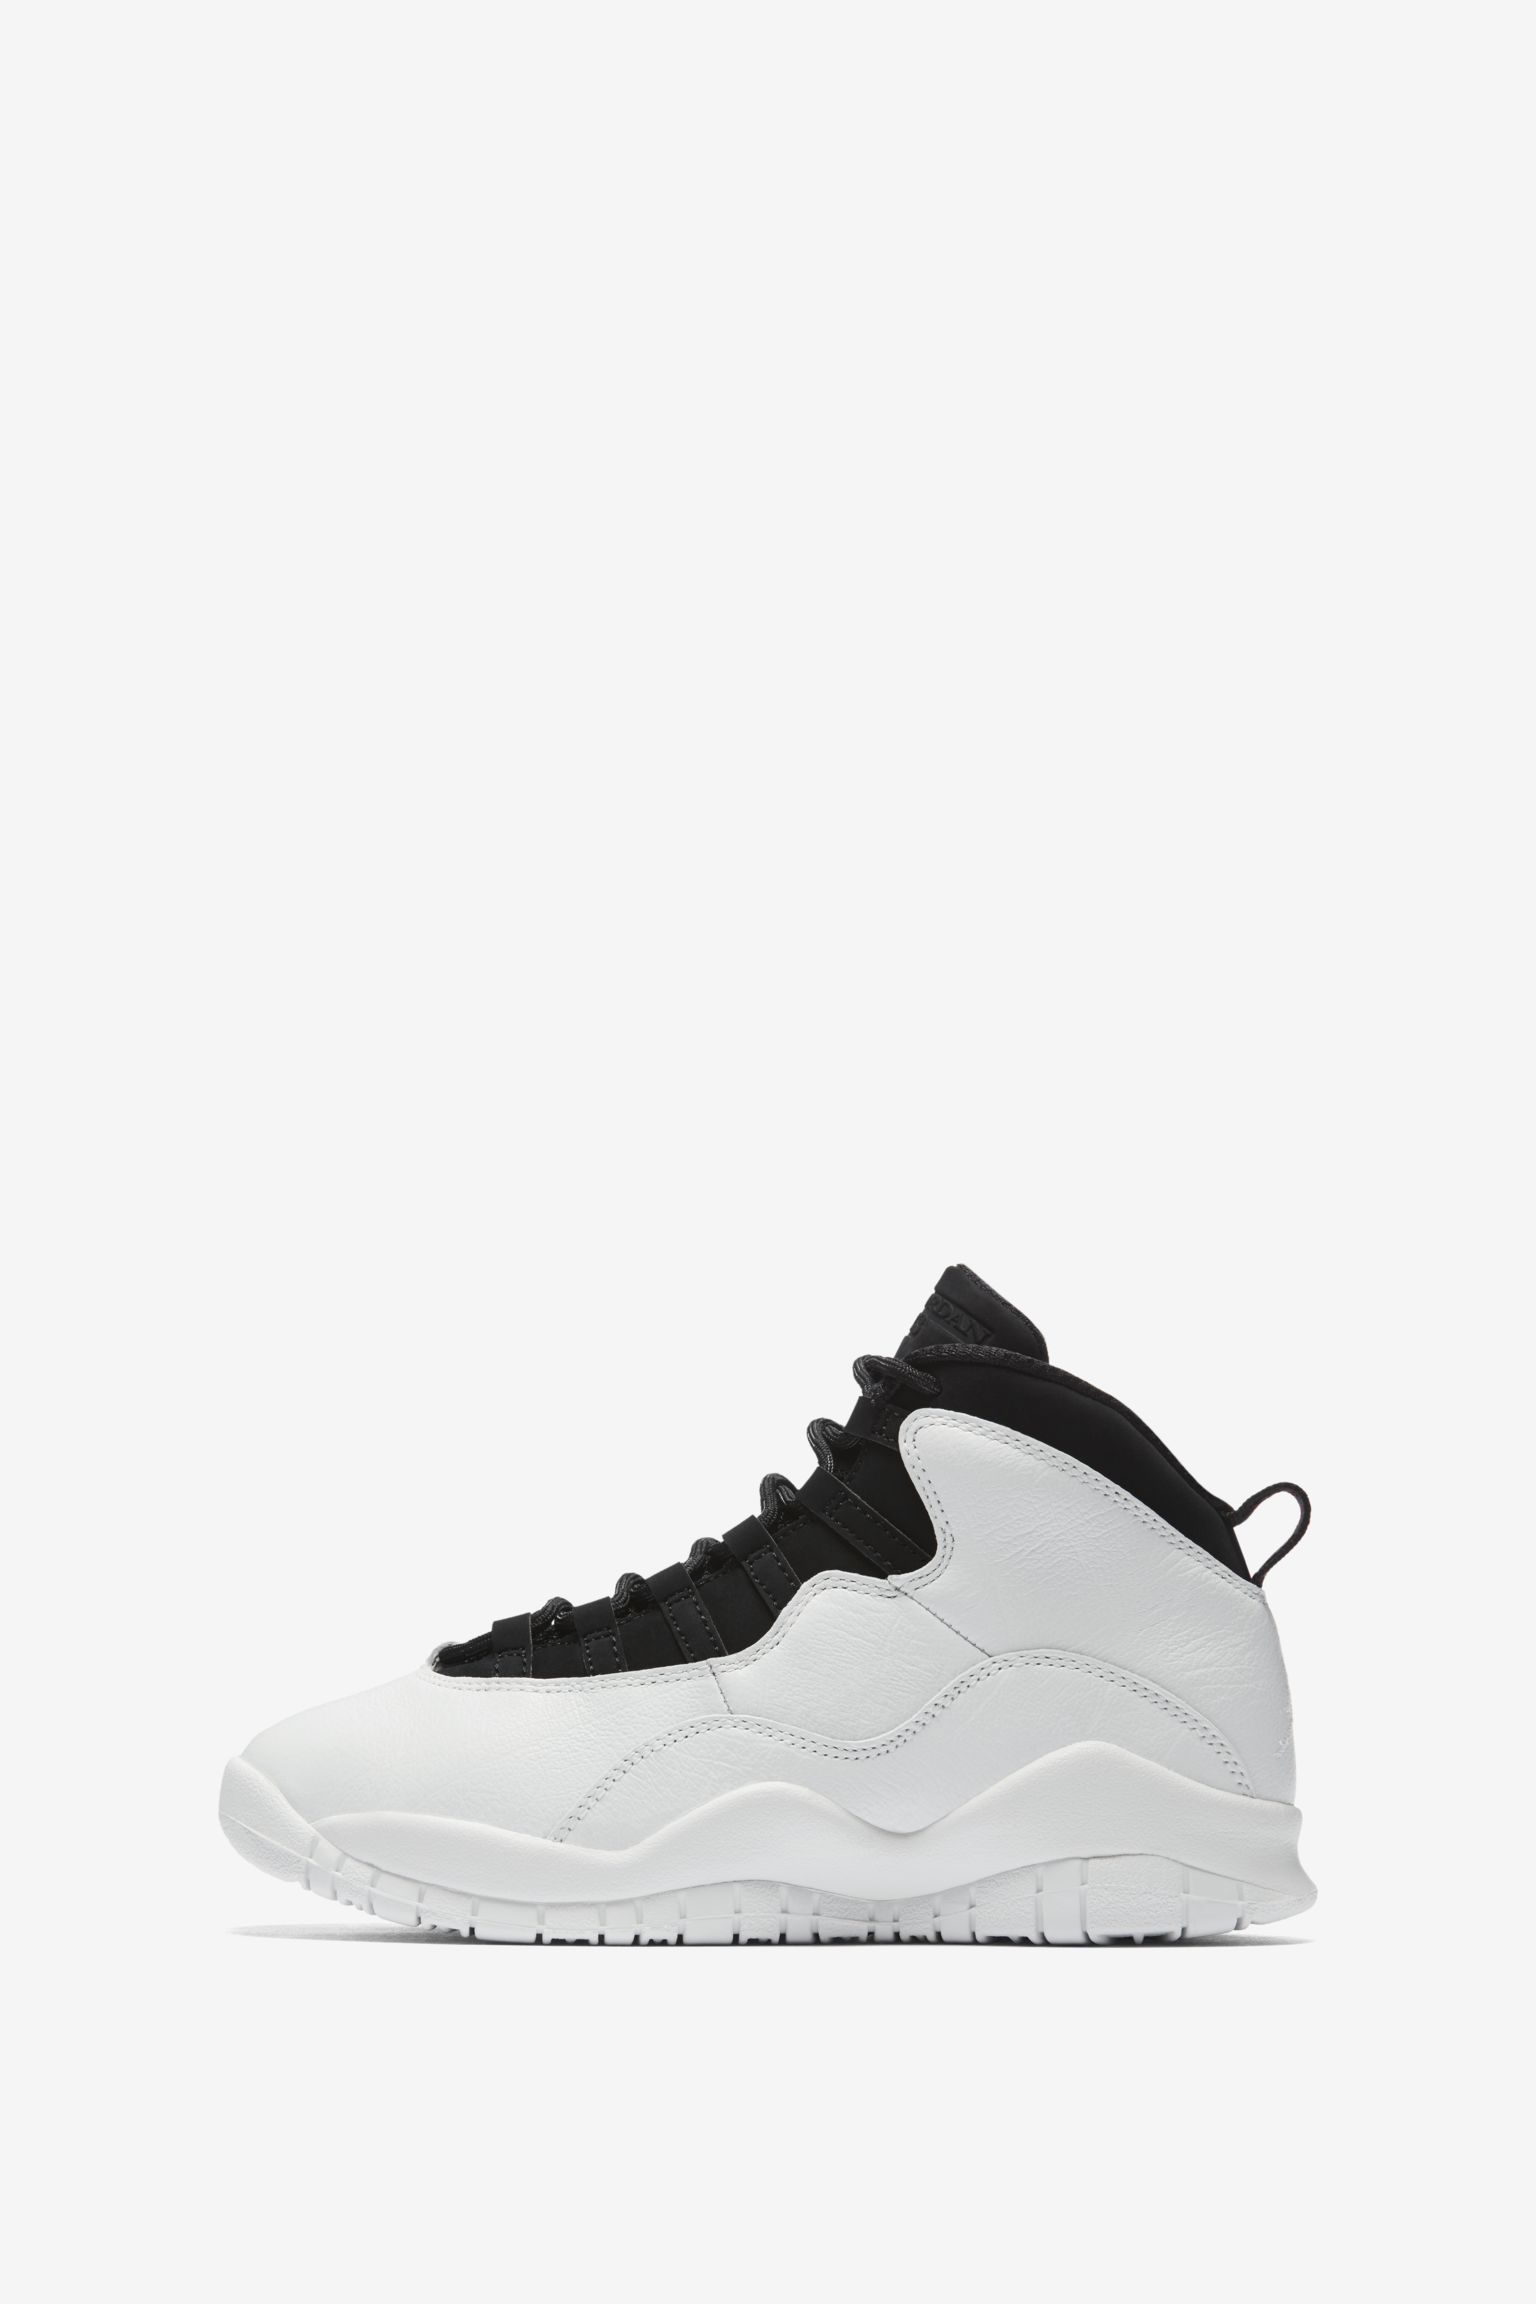 Air Jordan 10 Retro 'Summit White & Black' Release Date. Nike SNKRS